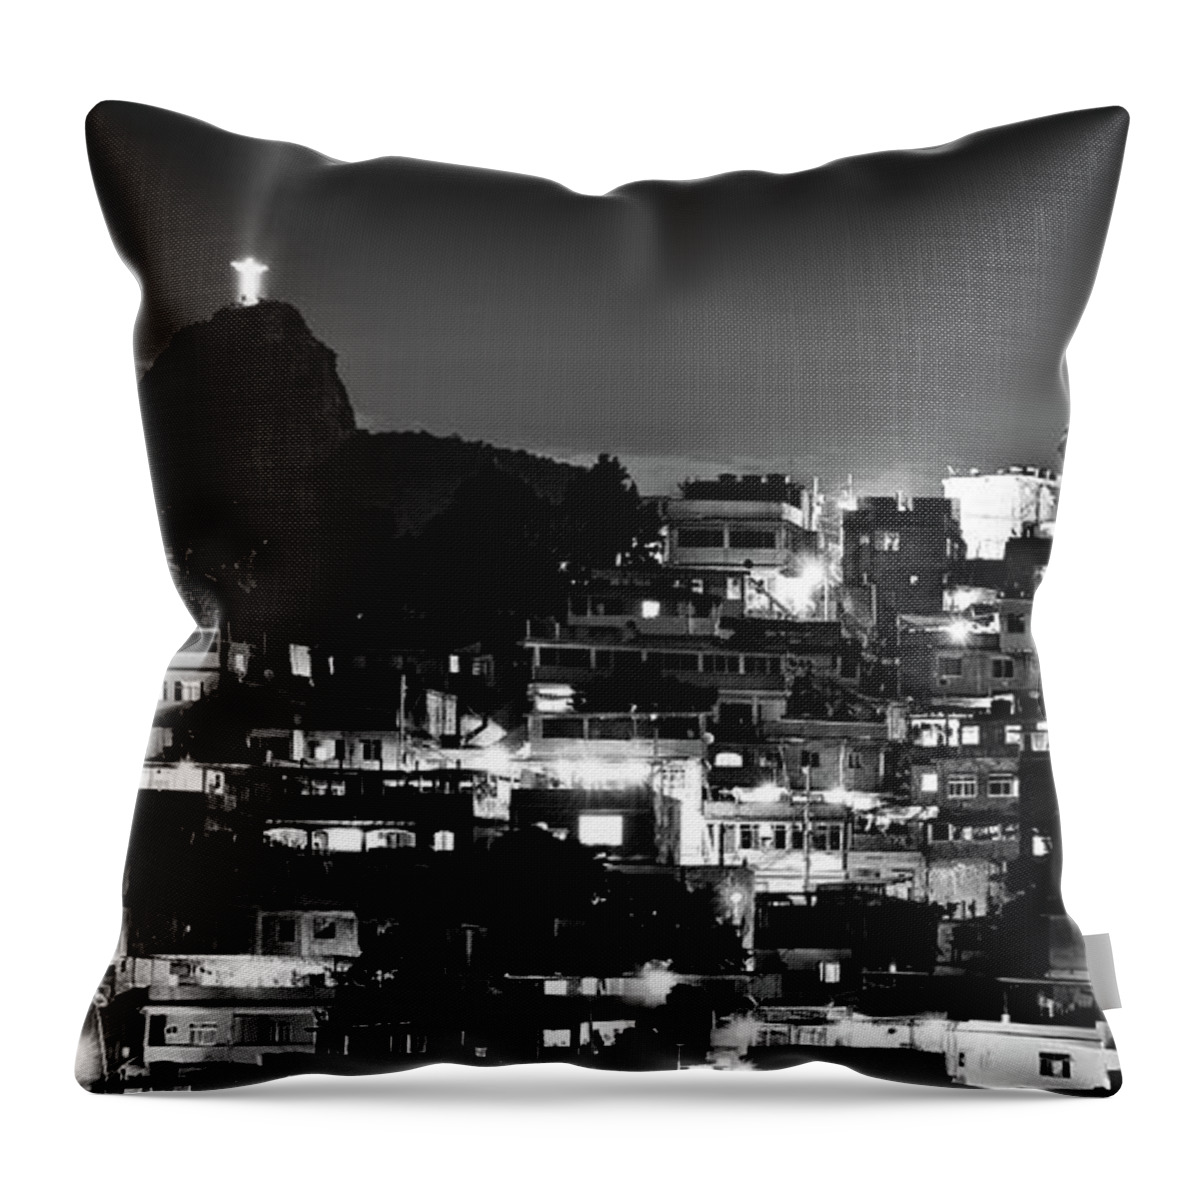 Leme Throw Pillow featuring the photograph Rio de Janeiro - Christ the Redeemer on Corcovado, Mountains and Slums by Carlos Alkmin